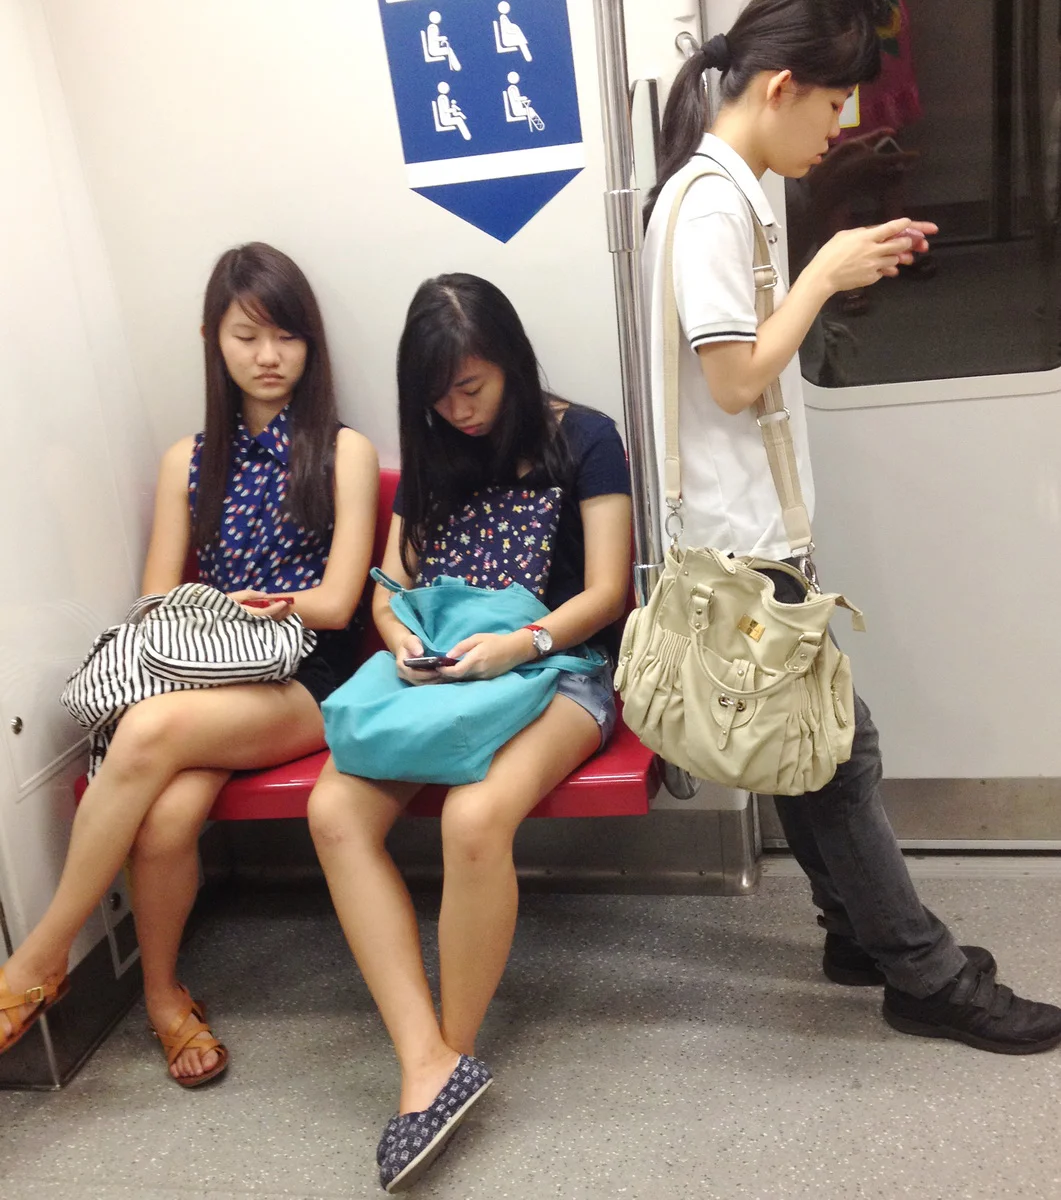 Транспорт Сингапура — метро, автобус, такси и монорельс